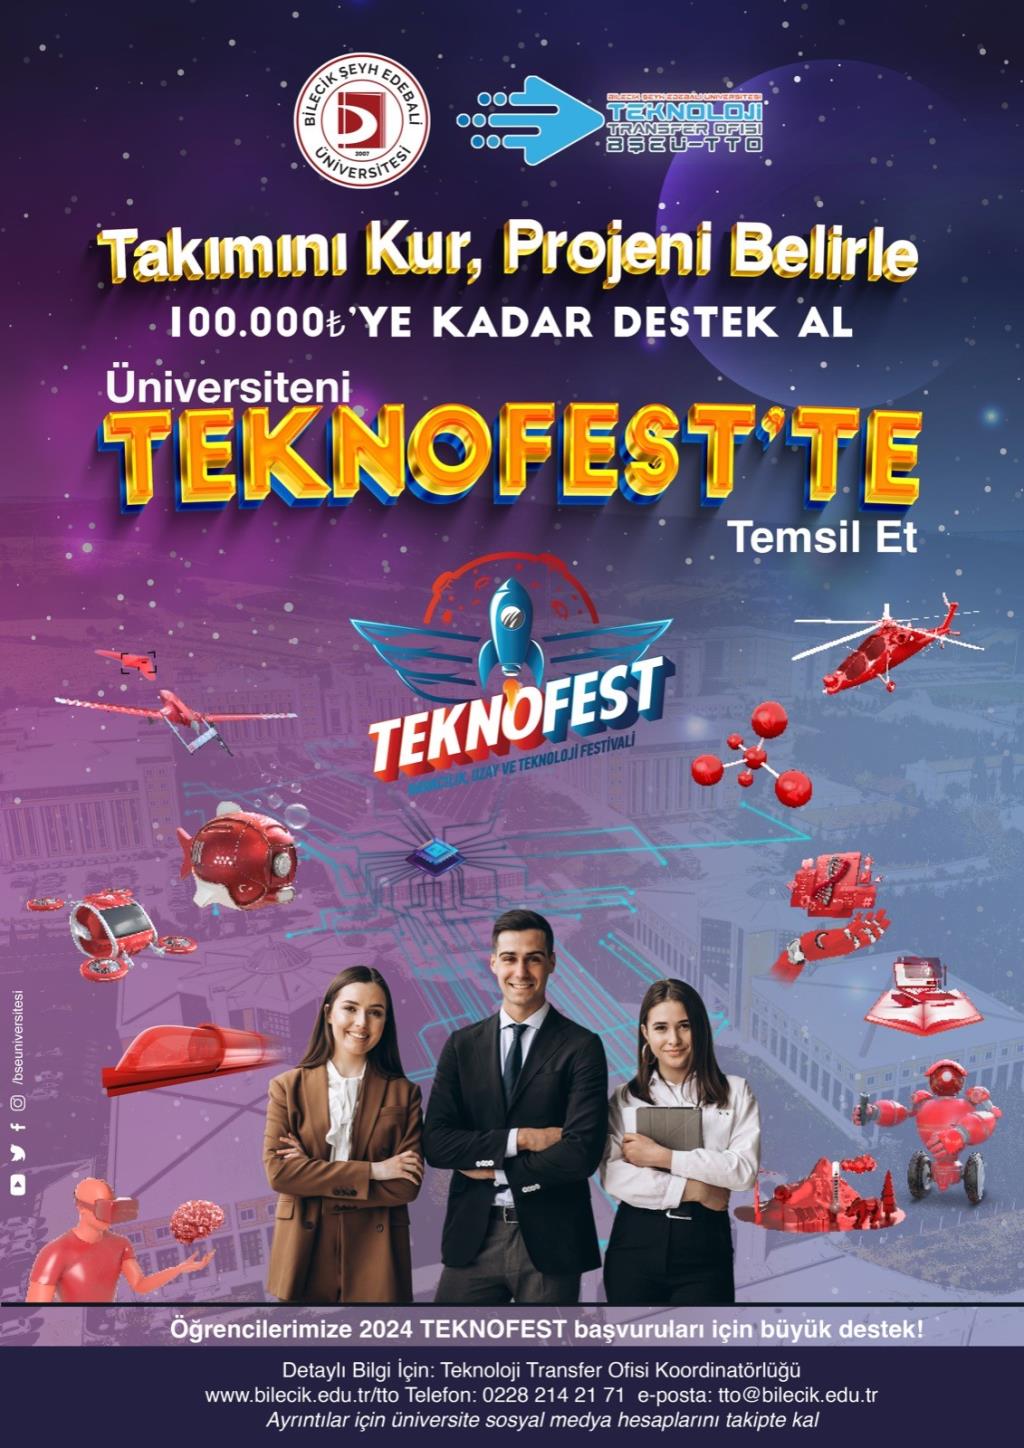 bseu-den-teknofest-icin-buyuk-destek1.png